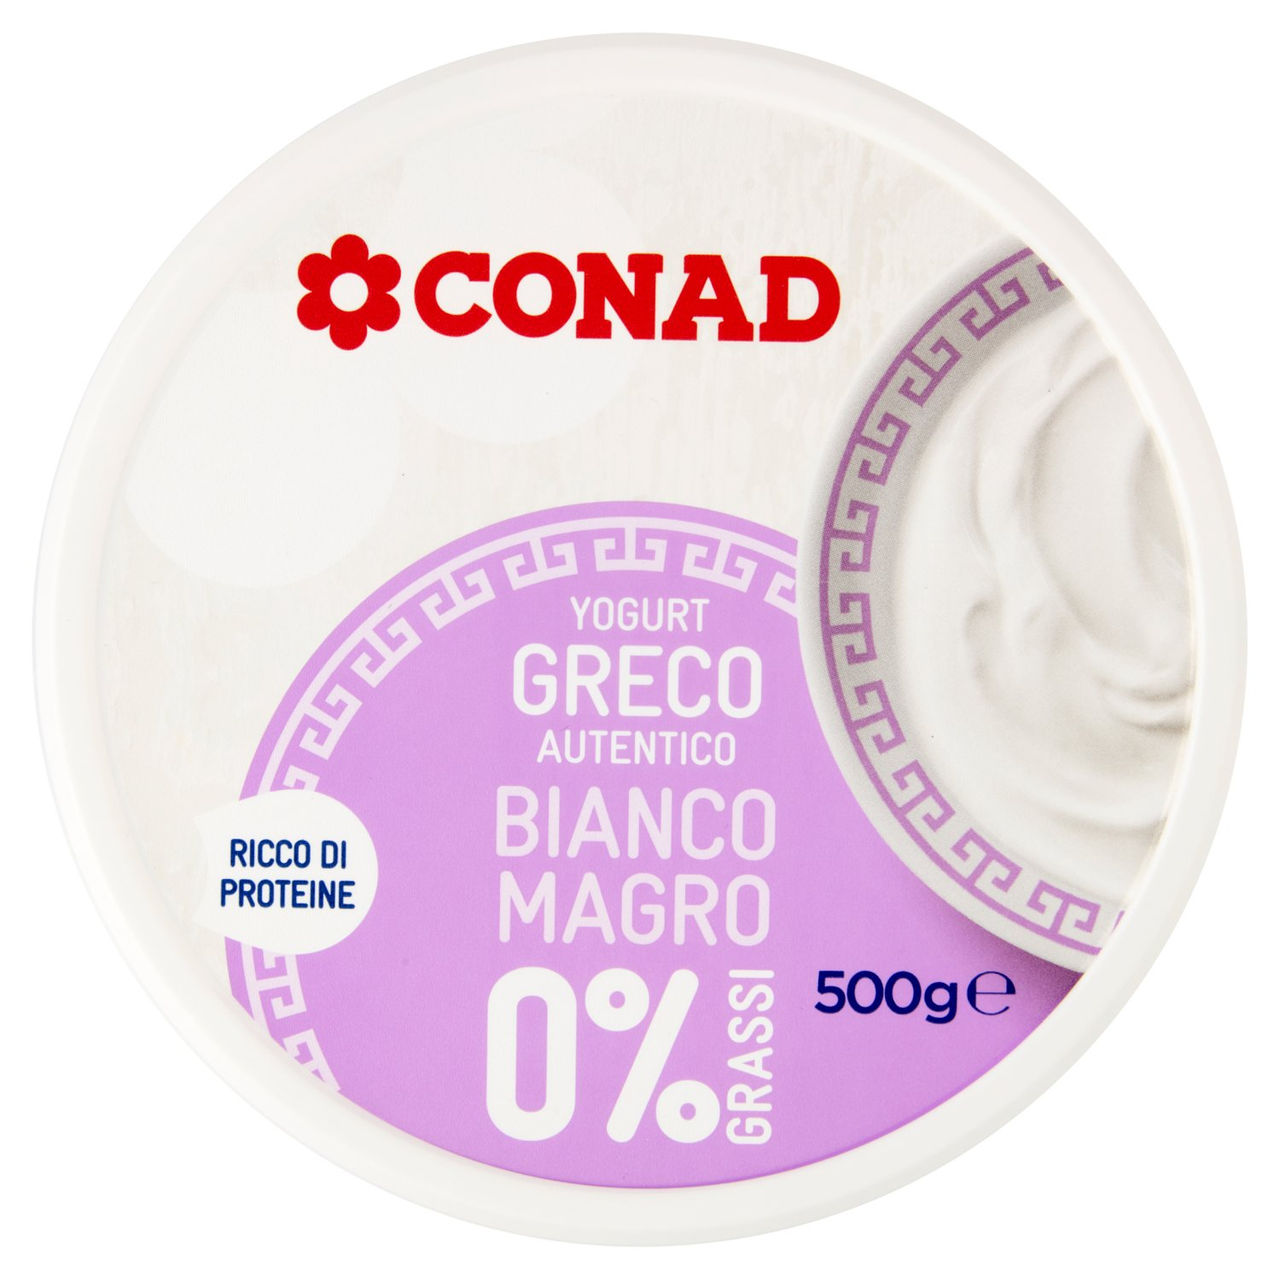 Conad Gaggi Viale Enrico Berlinguer, 171 - Yogurt Greco Autentico